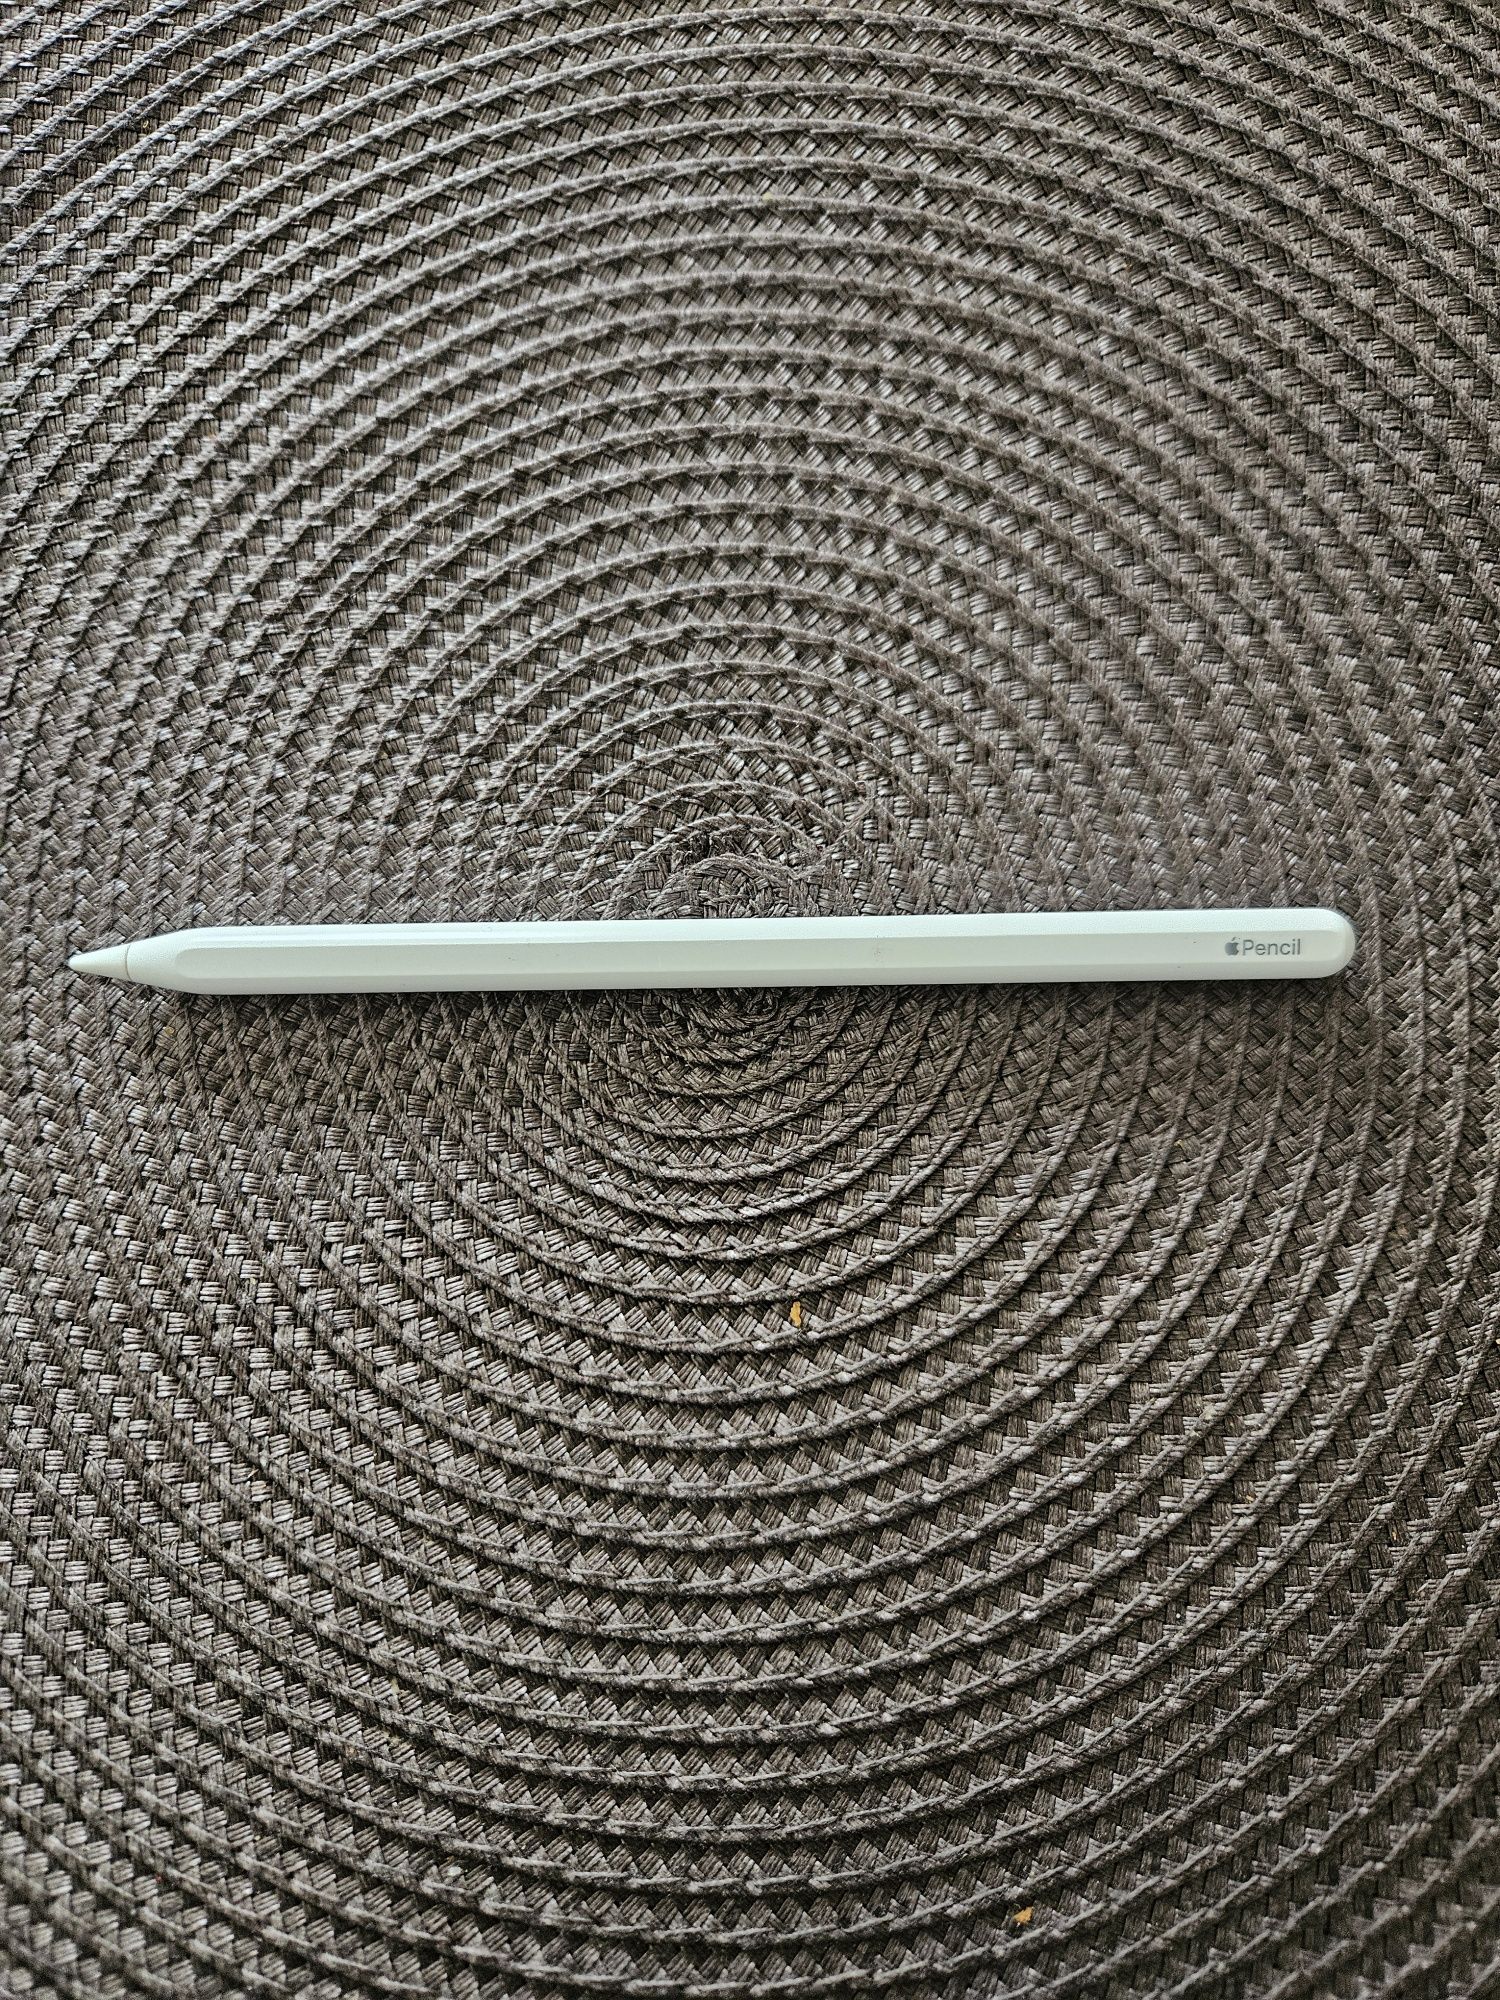 Apple Pencil 2 original